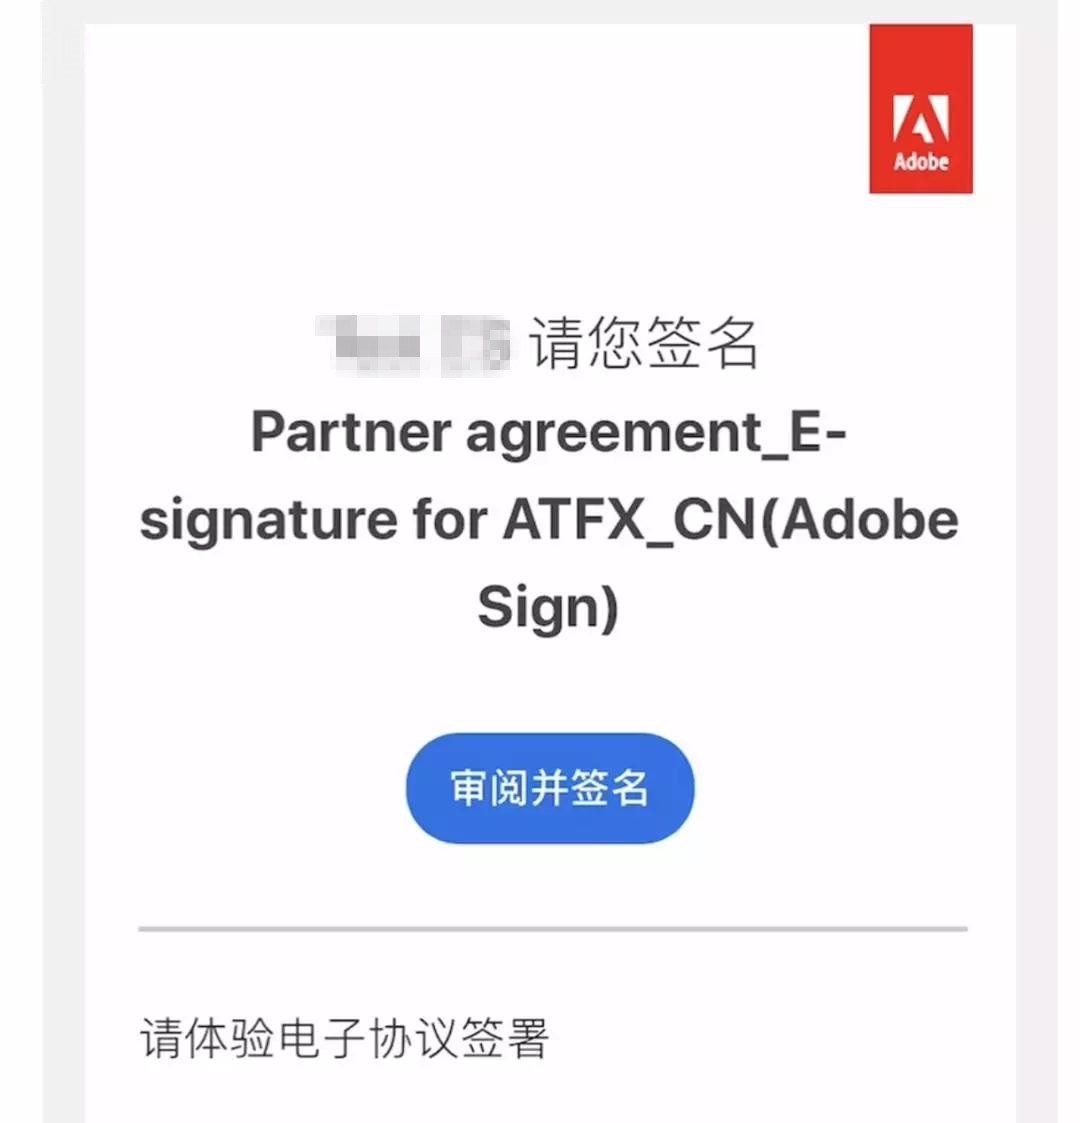 ATFX推出Adobe Sign网上签署服务系统，只需四步轻松签约